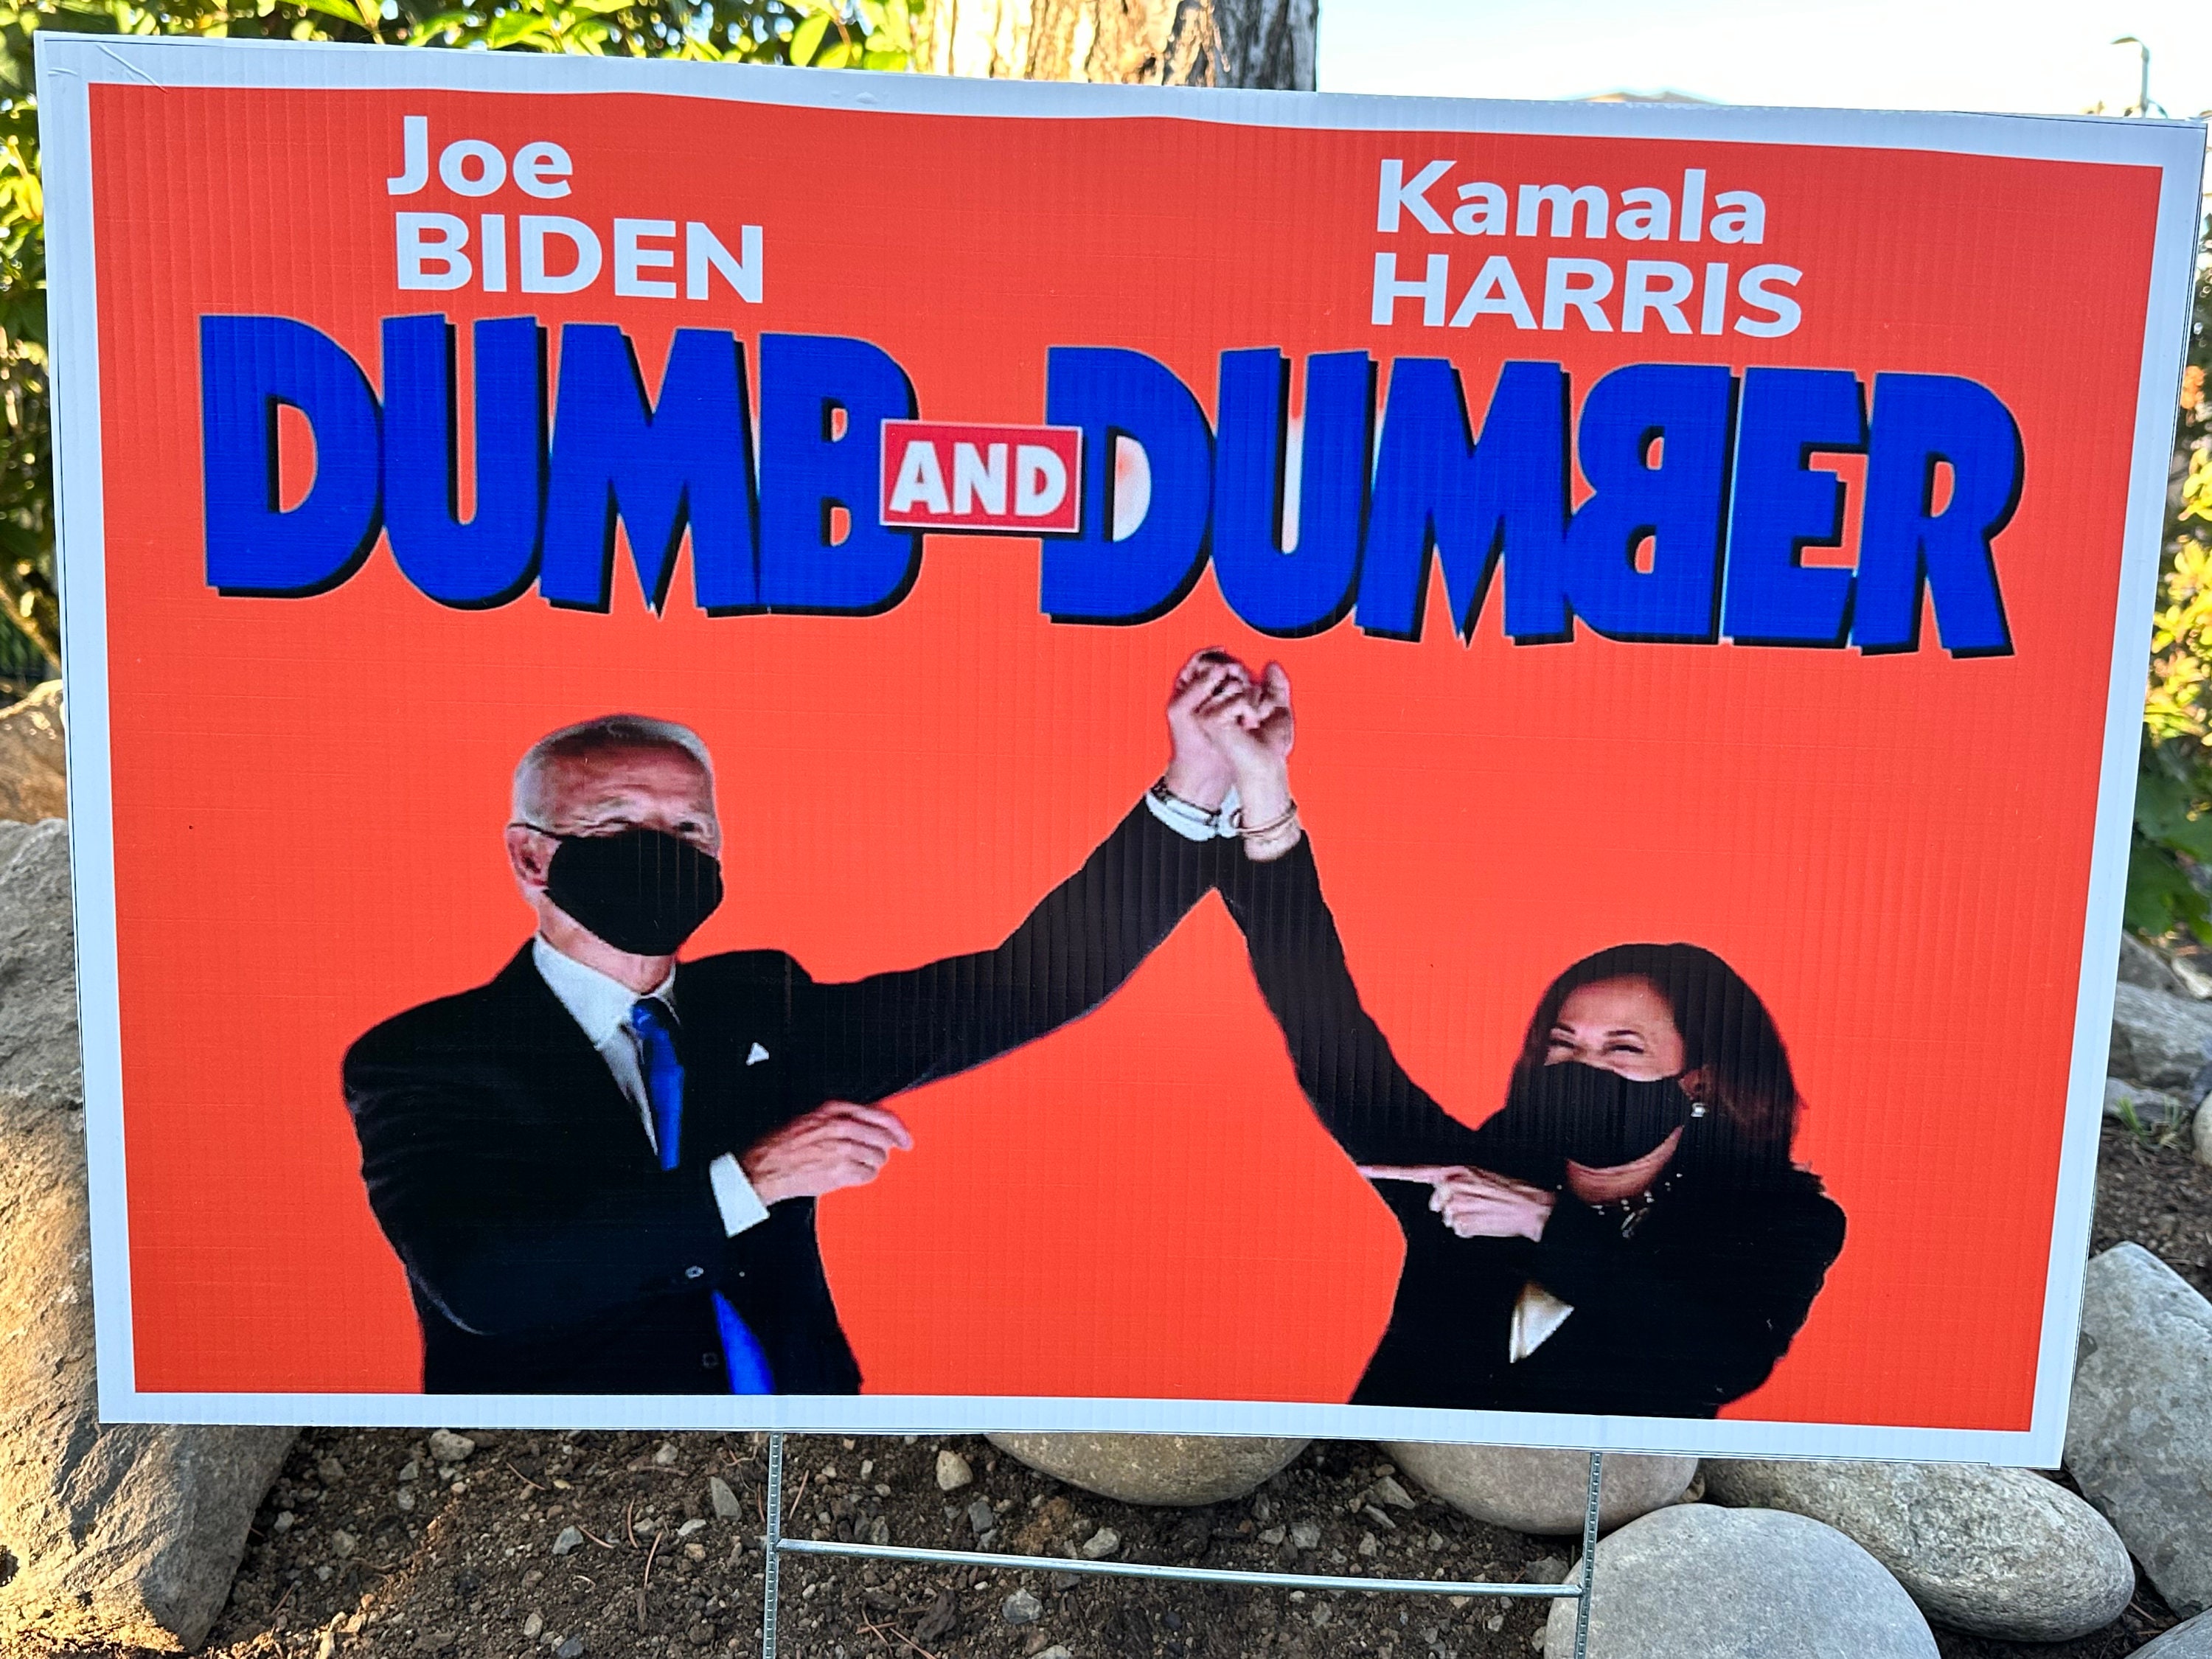 Joe Mama funny and humor political election yard lawn sign 18x24